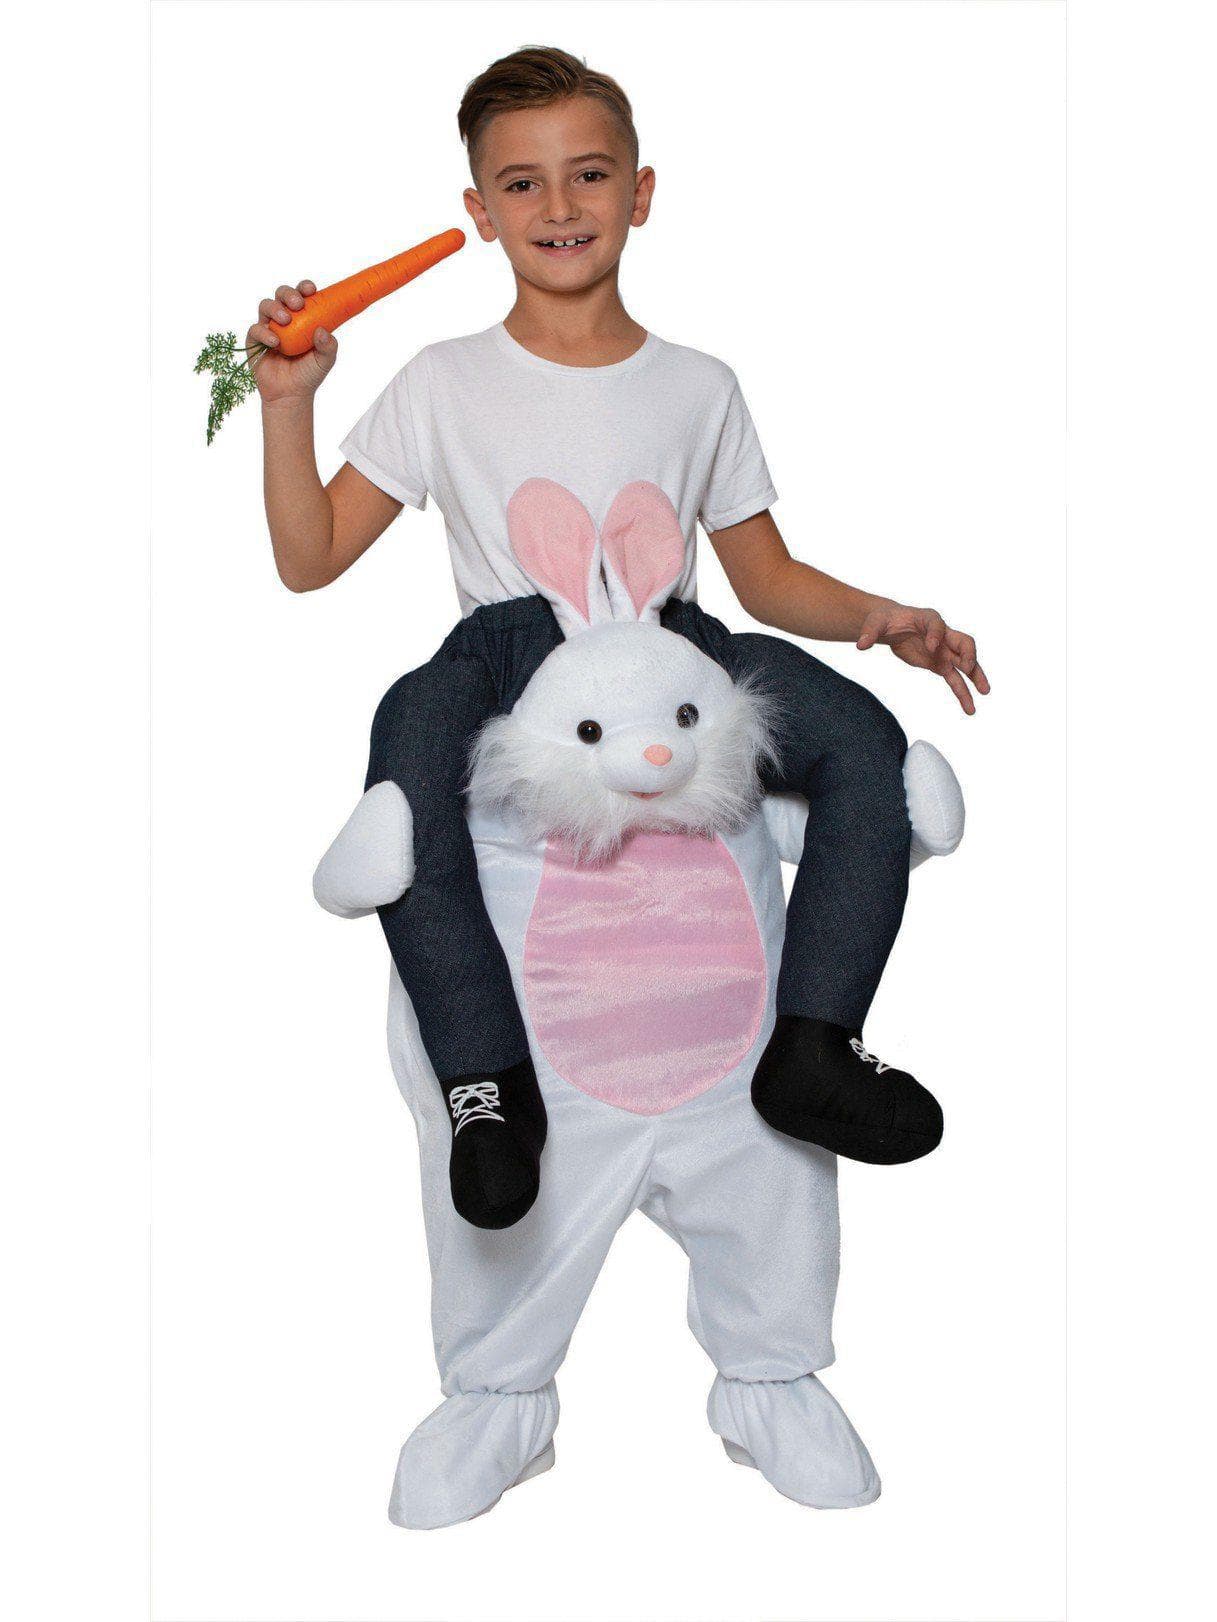 Kid's Ride On Bunny Costume - costumes.com